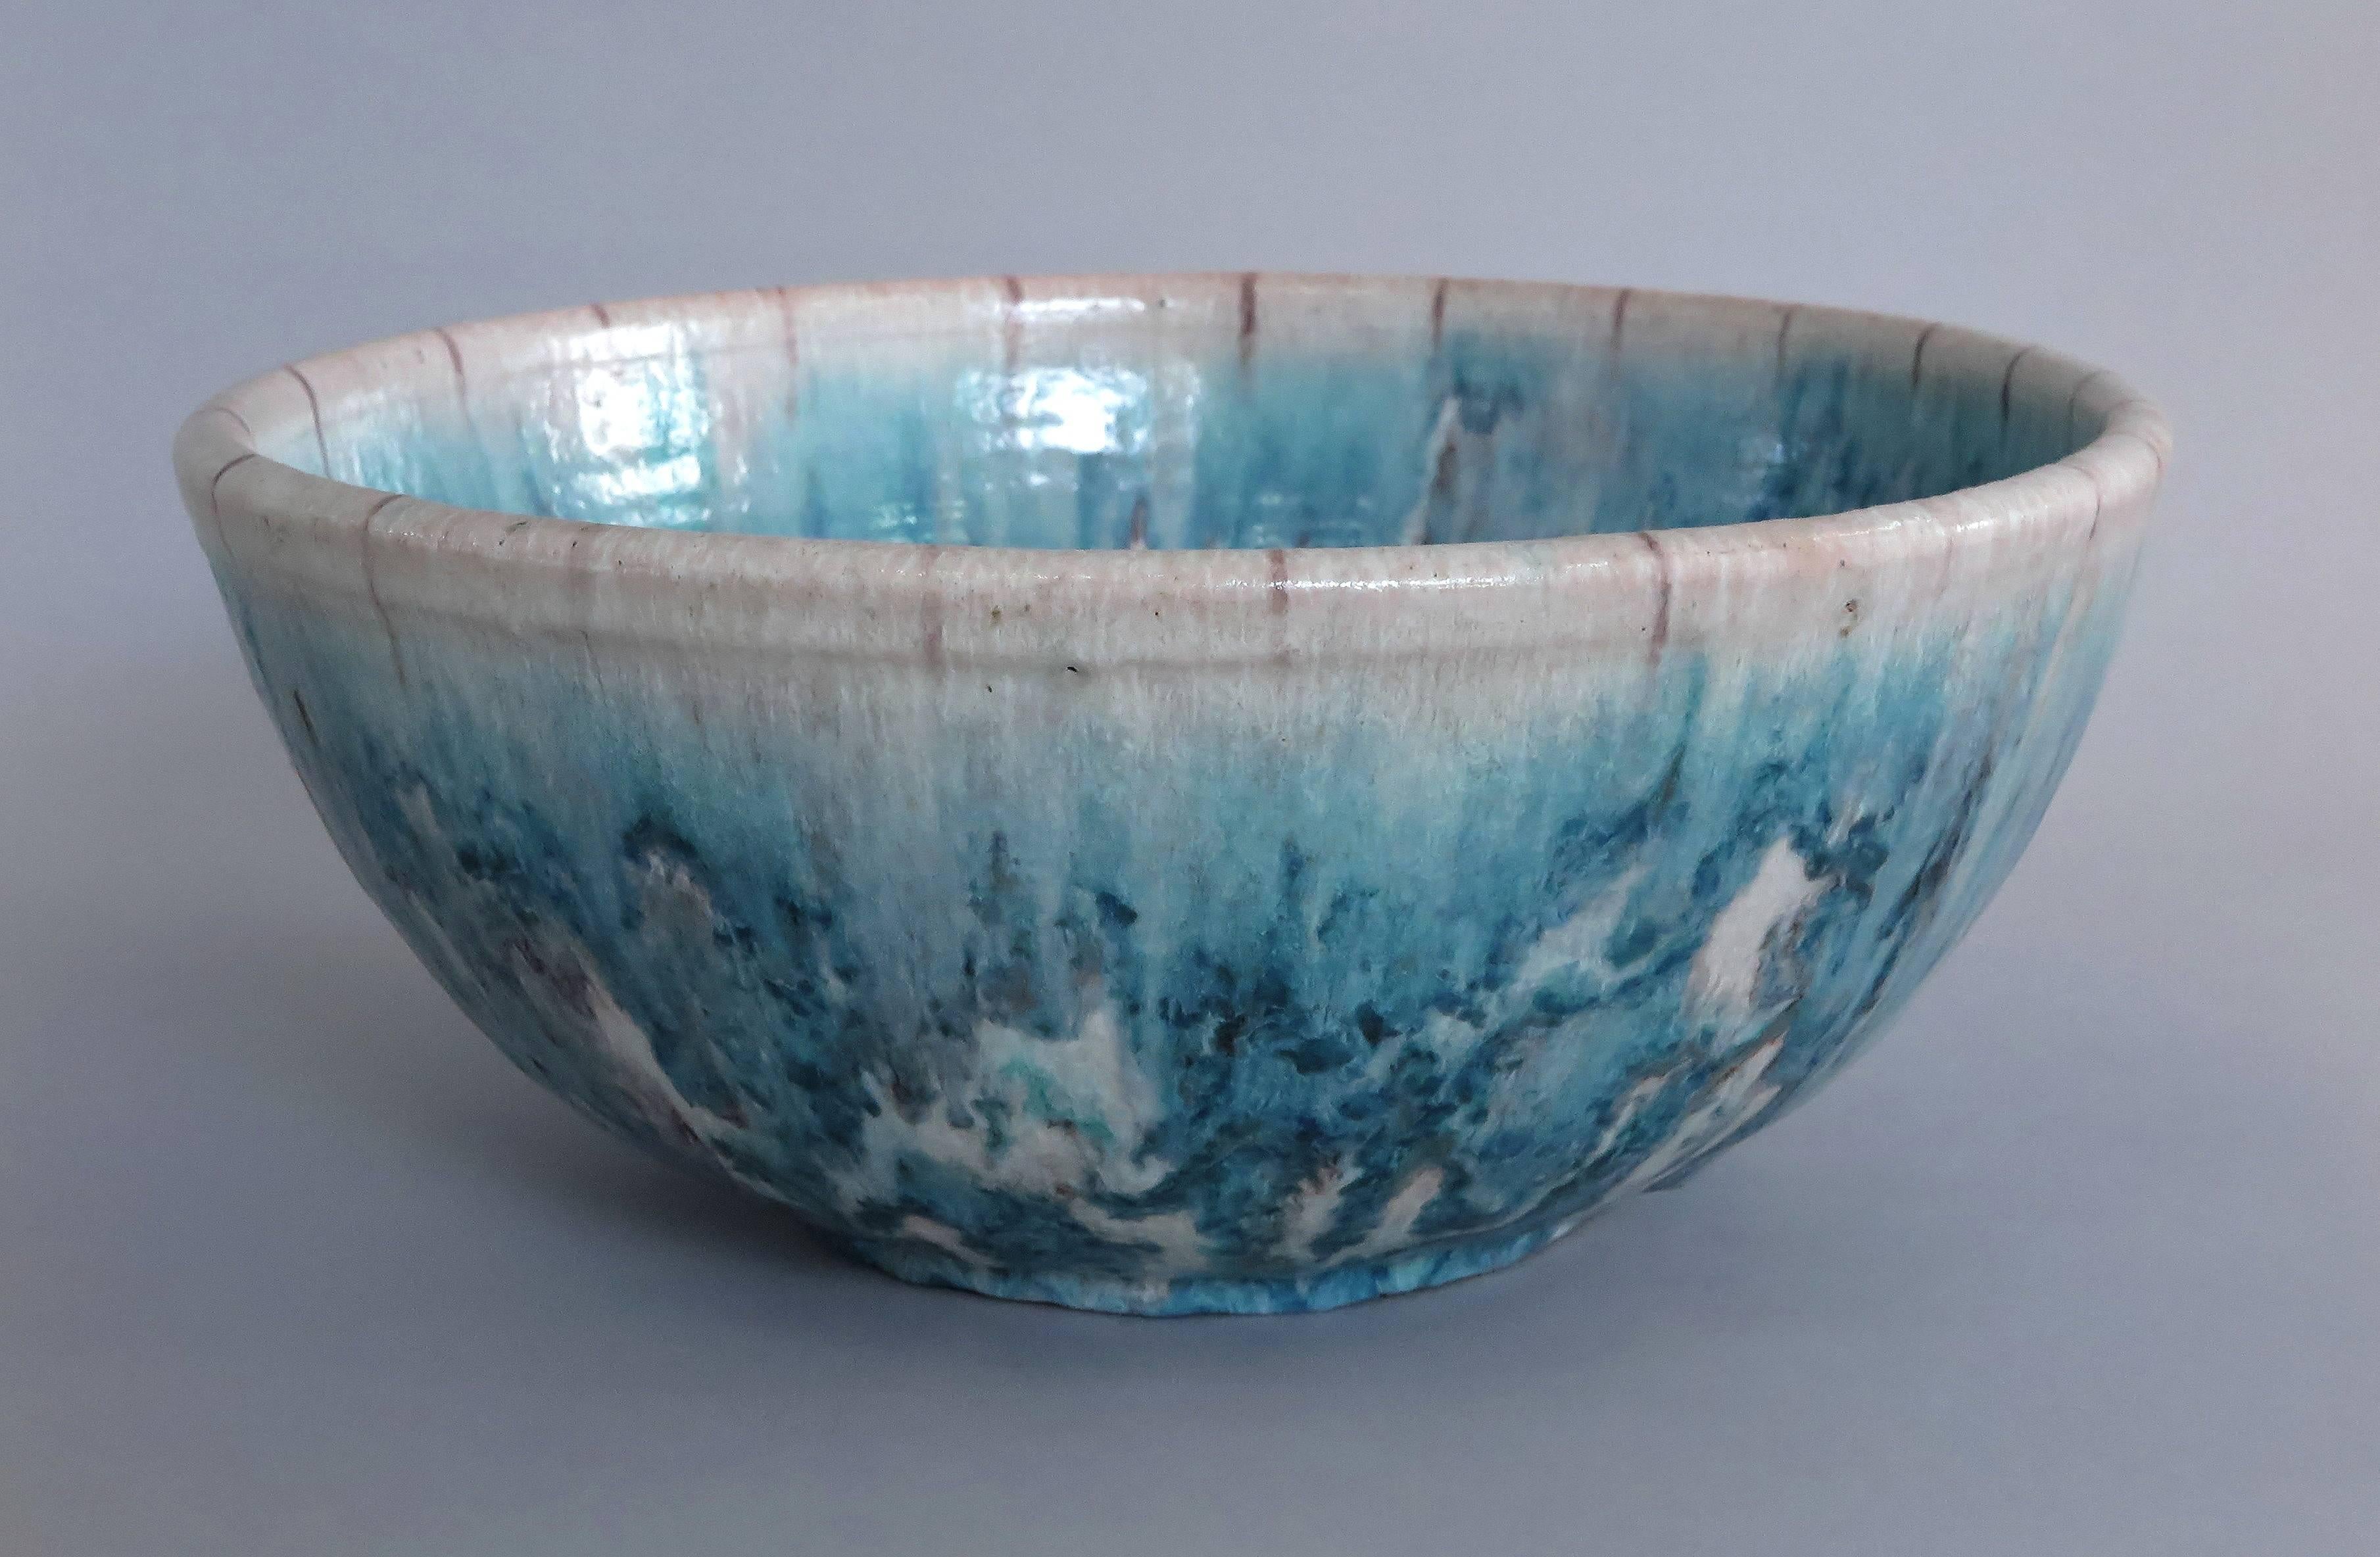 Classic bowl in bluegreen by Guido Gambone, Vietri Italy 1950s,
Donkey-Mark.